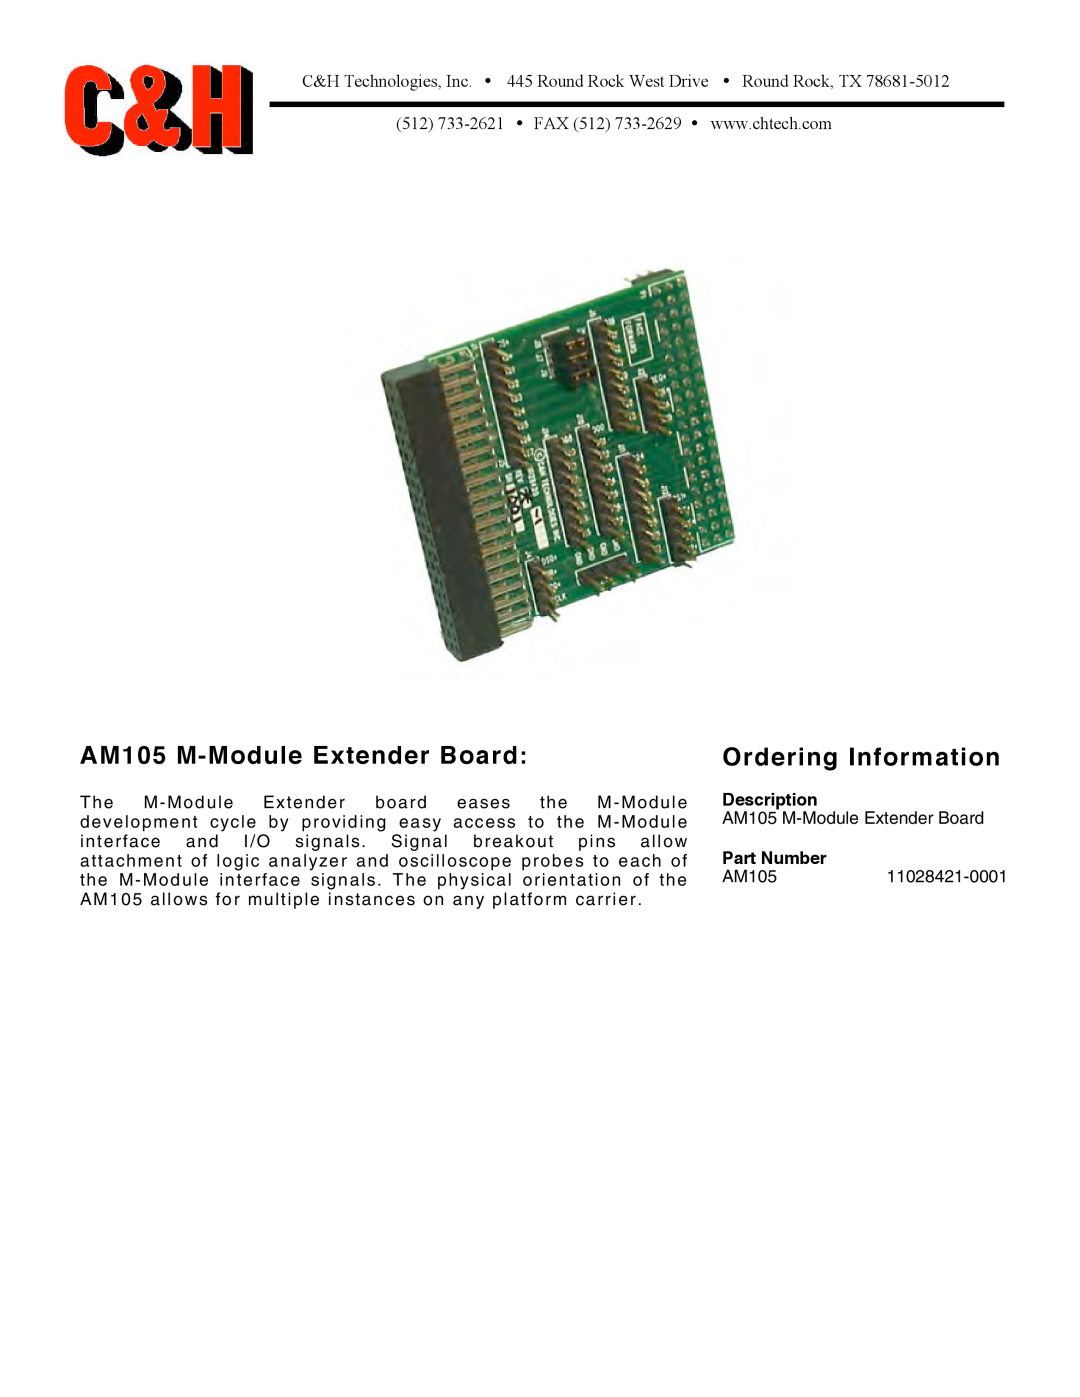 CH Tech manual AM105 M-Module Extender Board, Ordering Information, Description, Part Number 